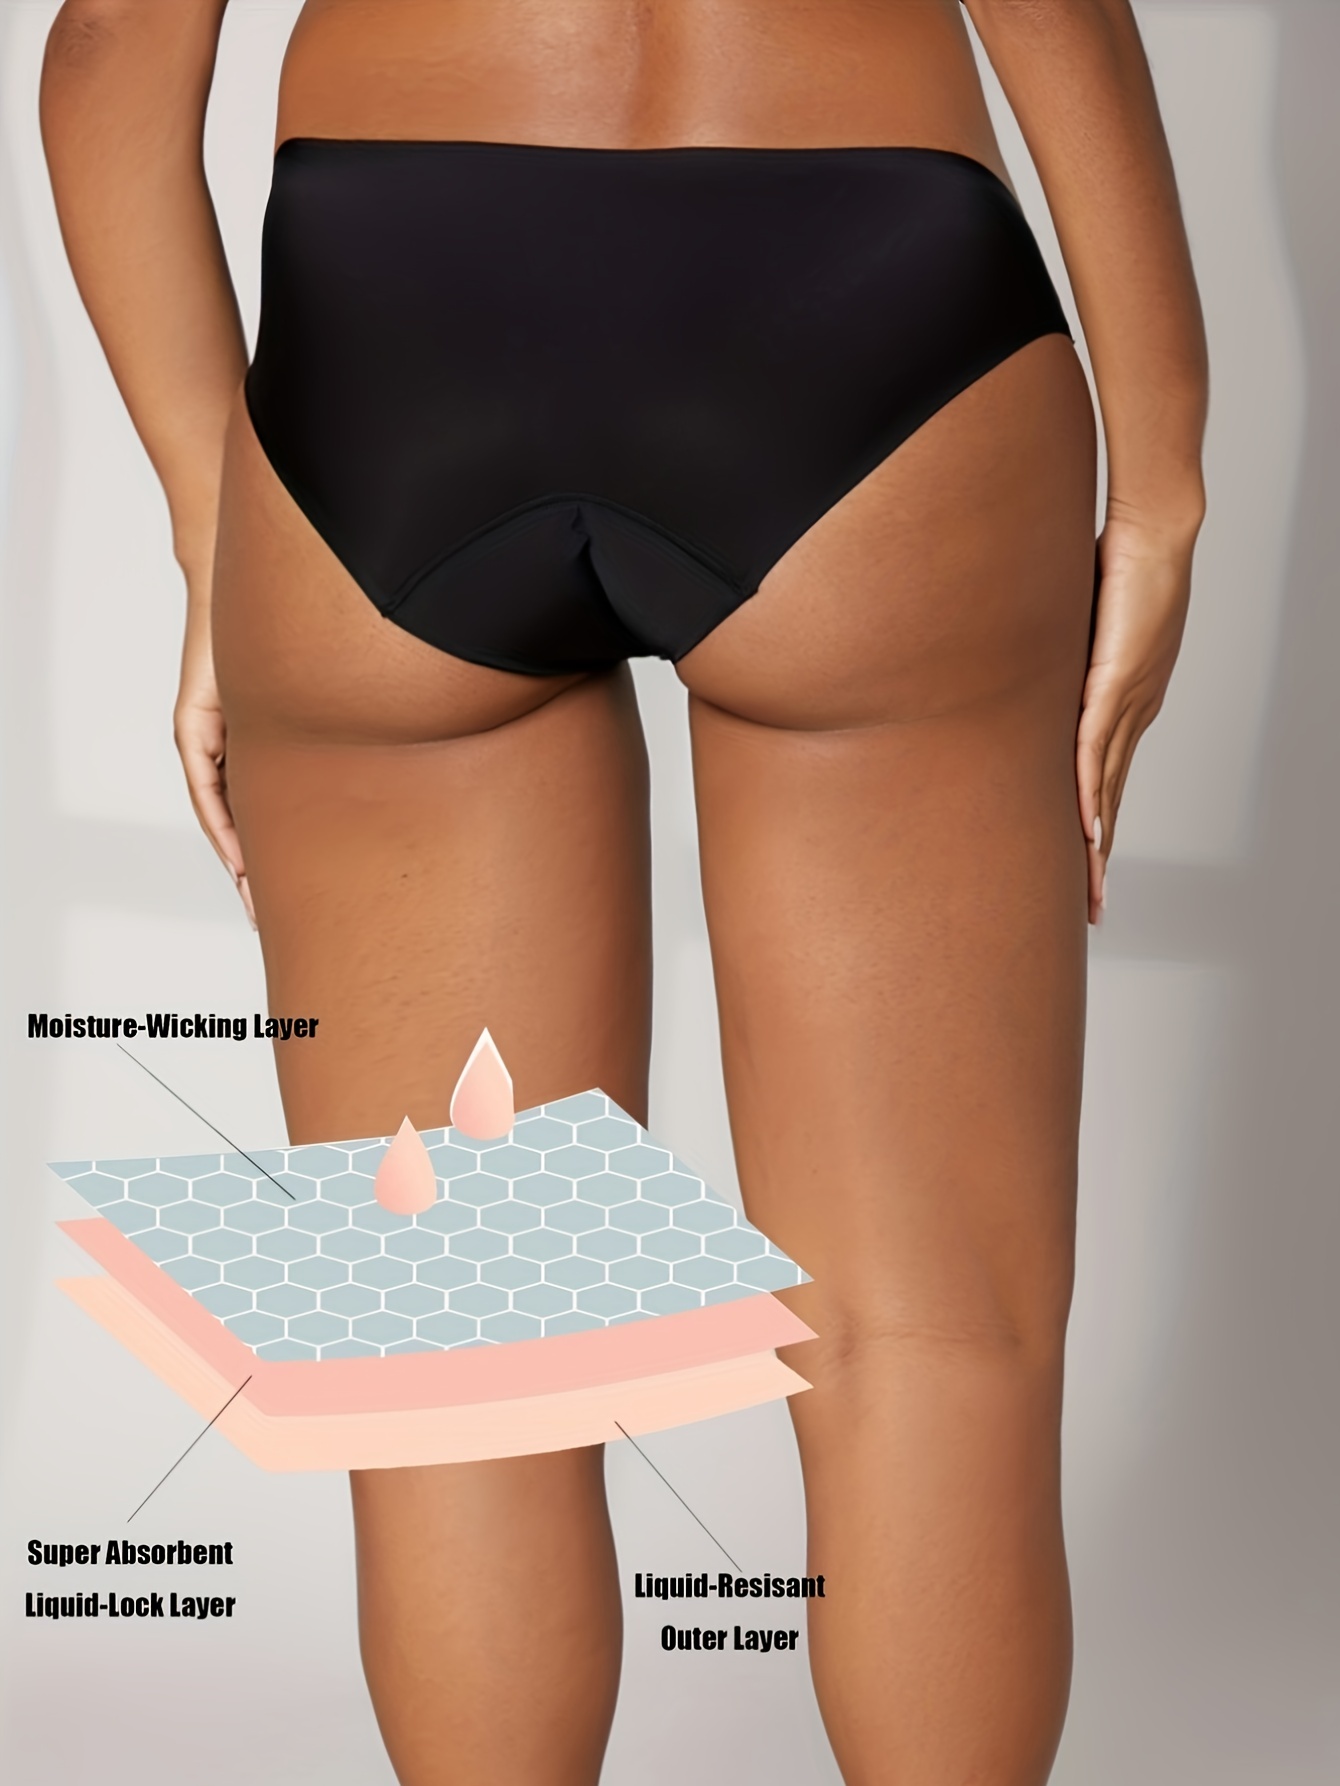  2 Pics Plus Size Adult Leak-Proof Underwear for